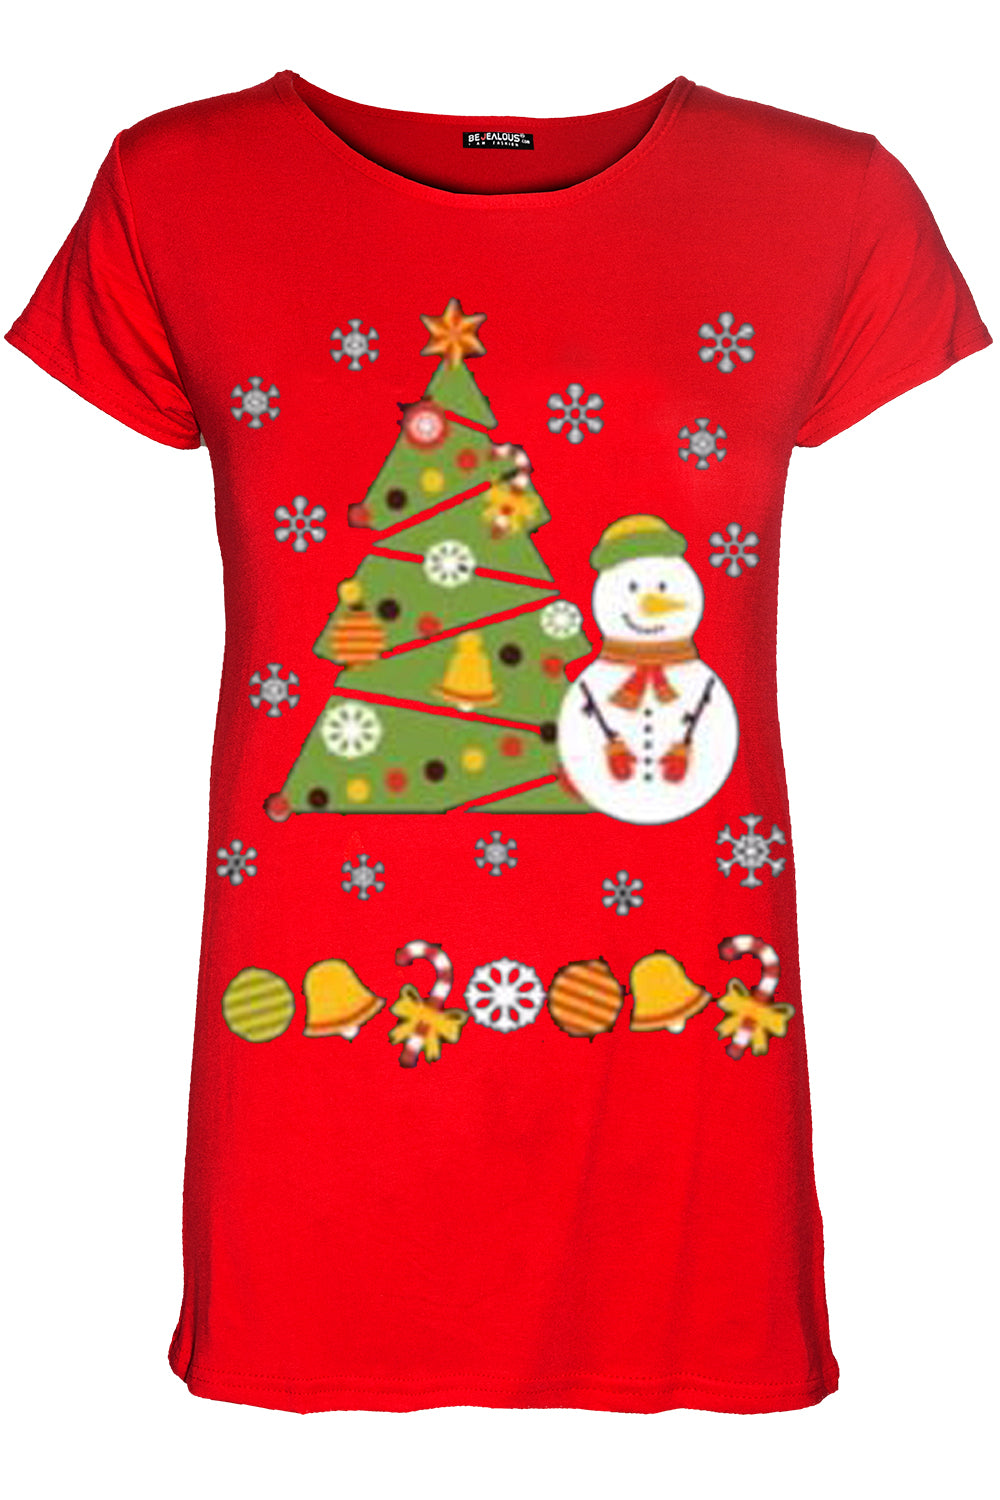 Maisie Christmas Cap Sleeve Xmas T Shirt Top